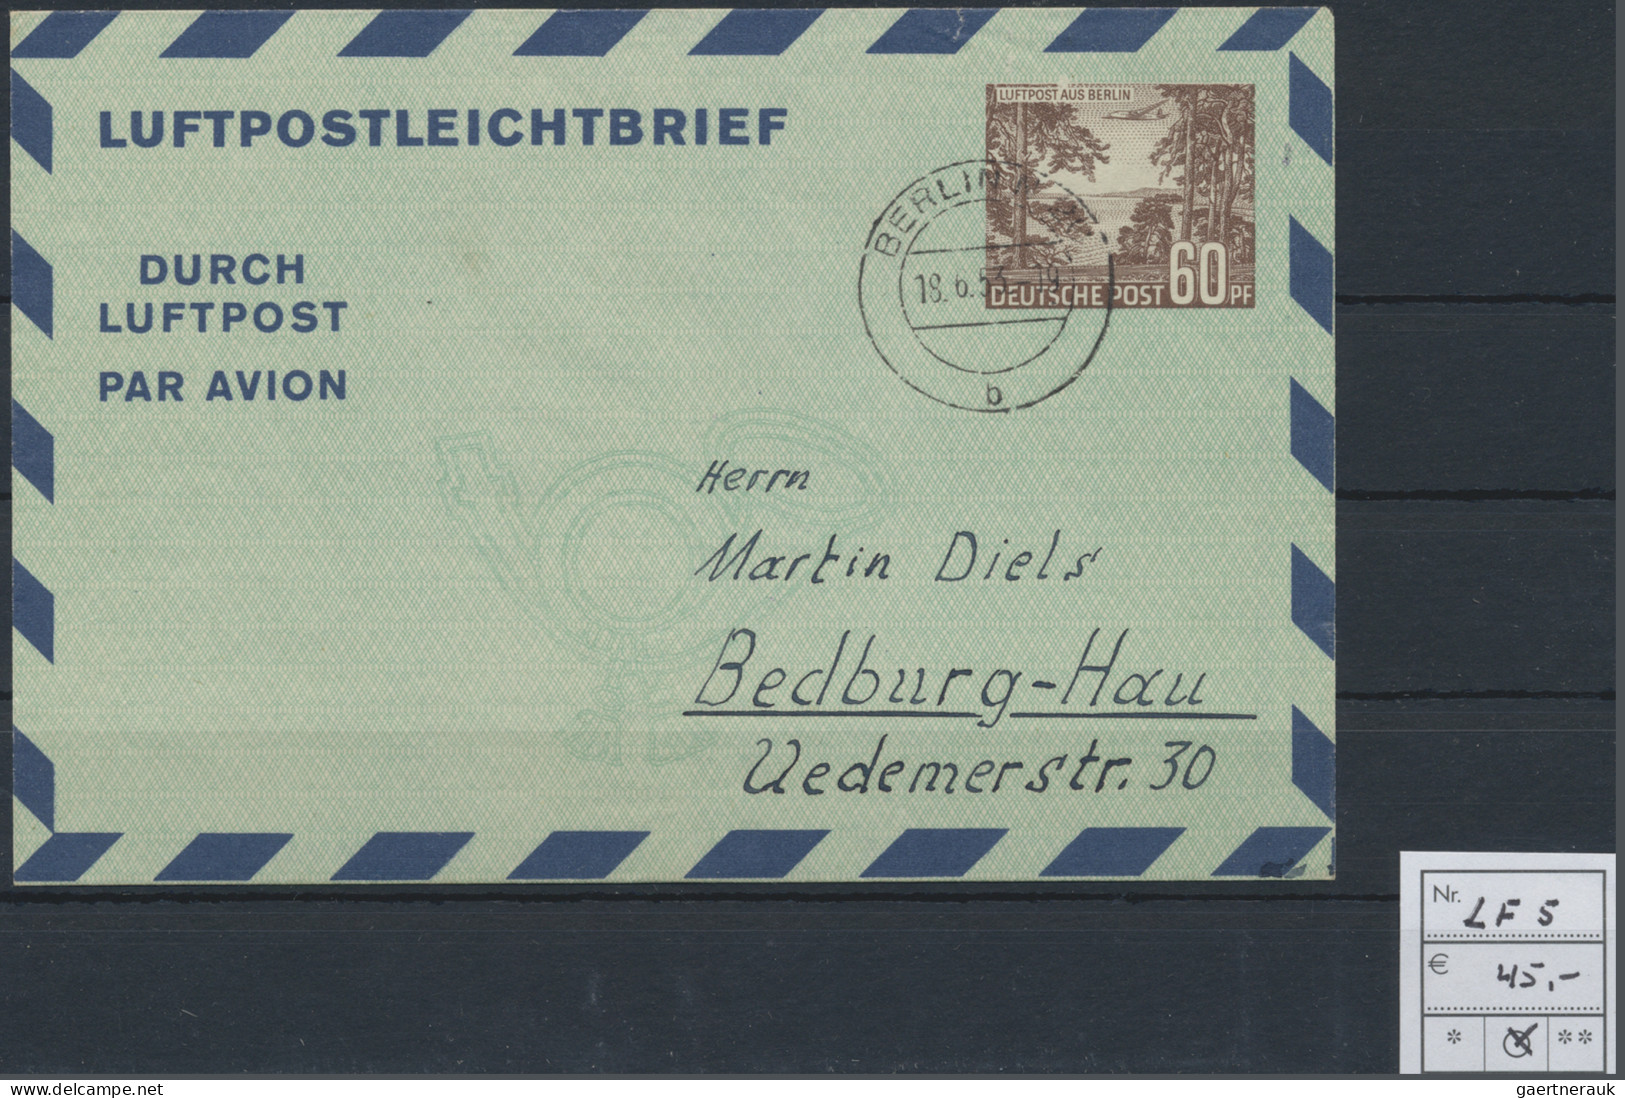 Berlin: 1948/1964, saubere Steckkartenpartie mit guten gestempelten Anfangswerte